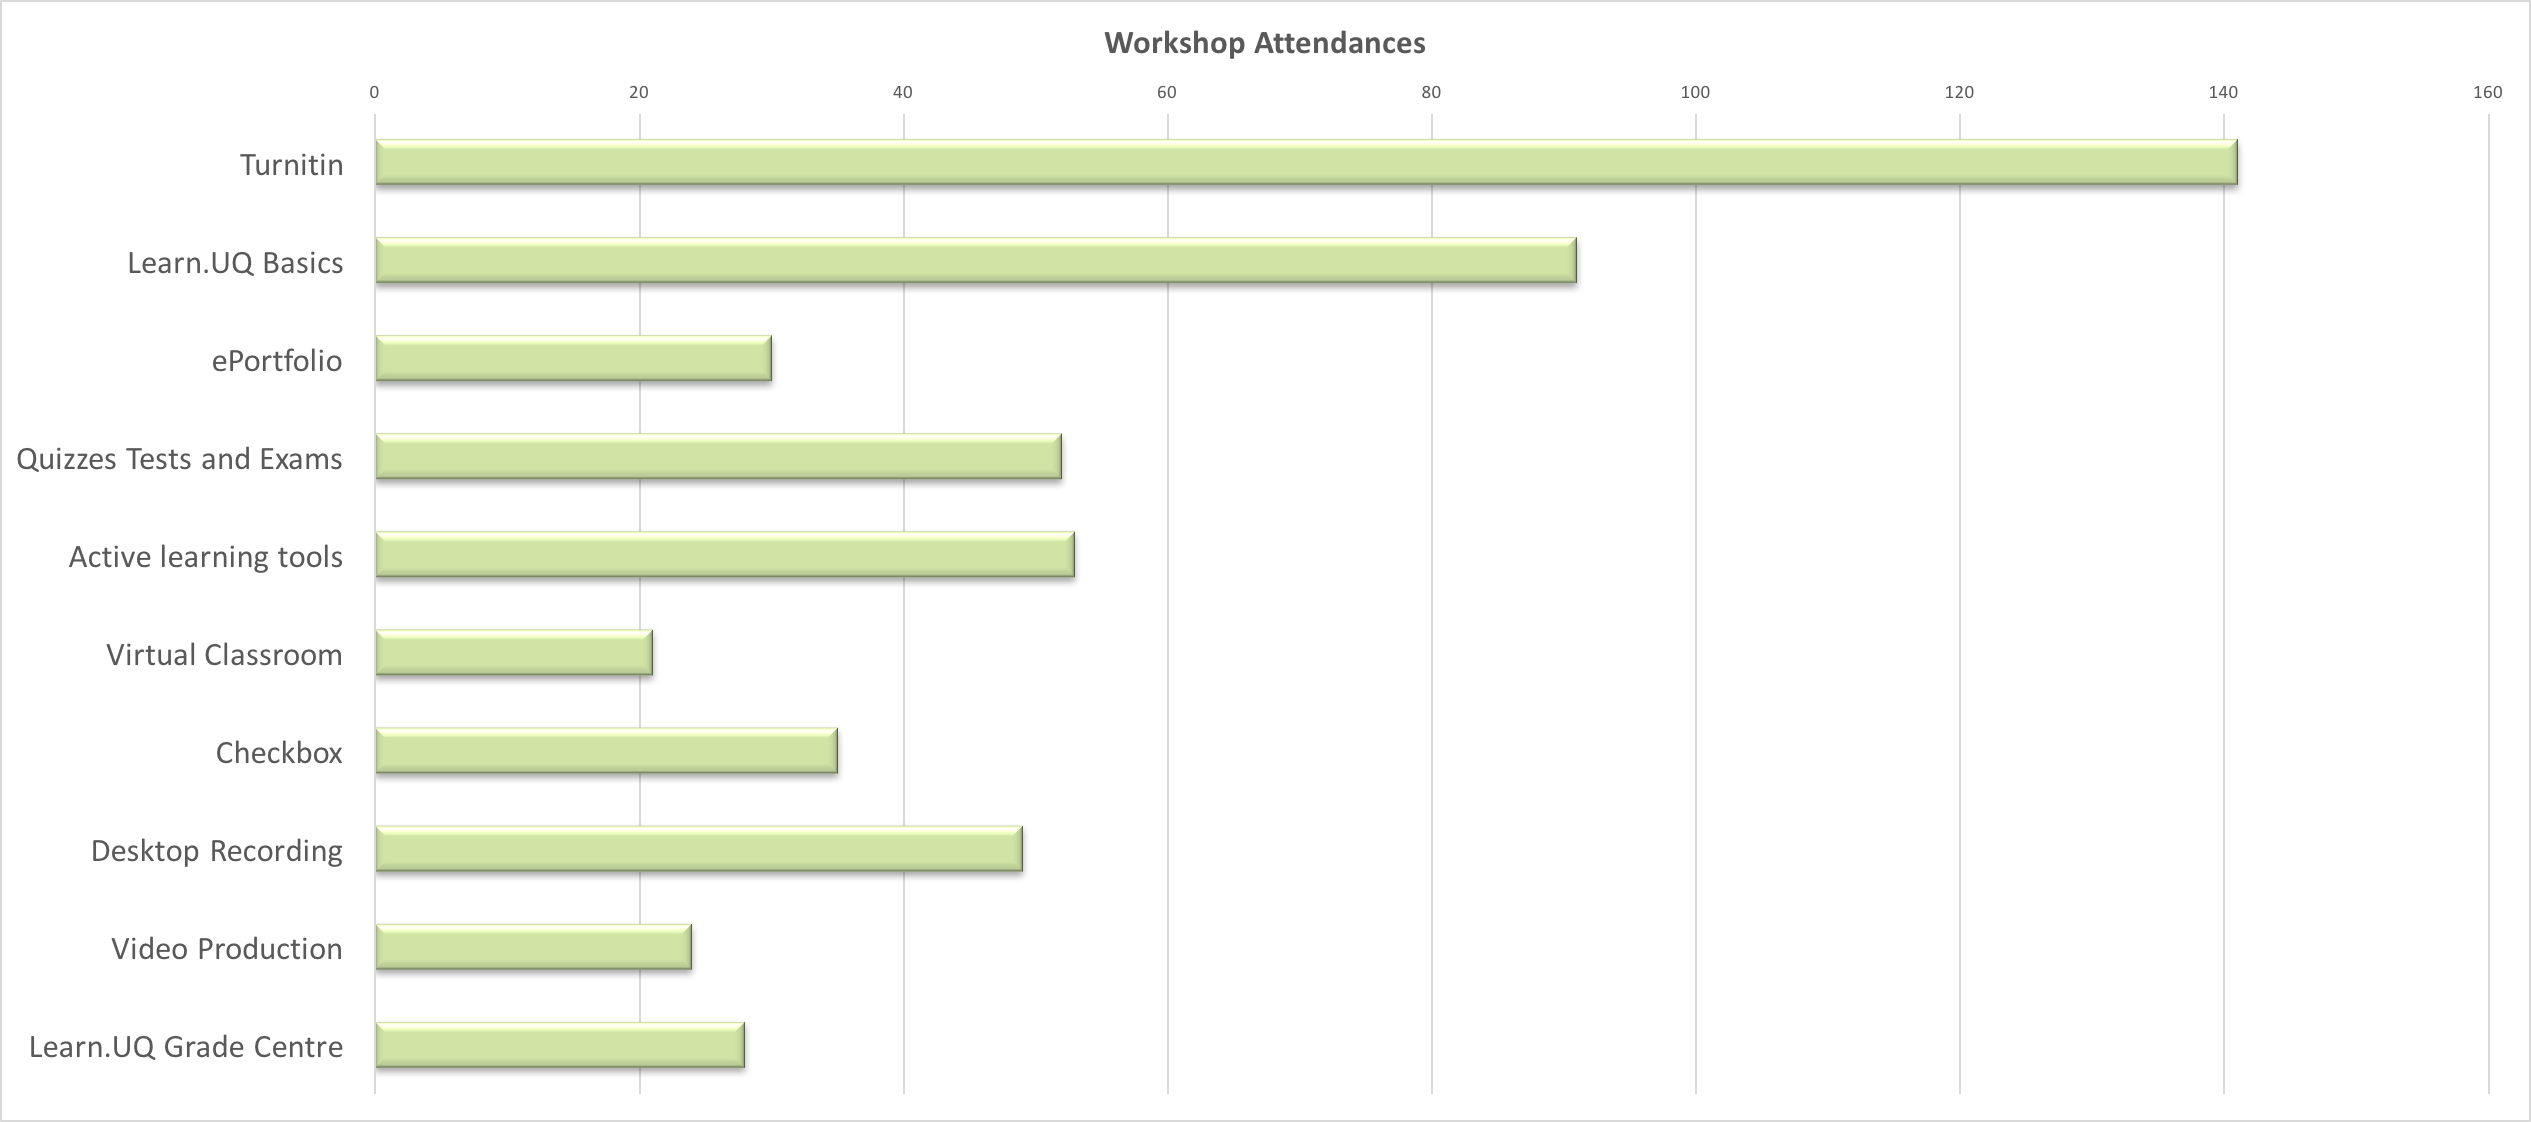 Workshop Attendances